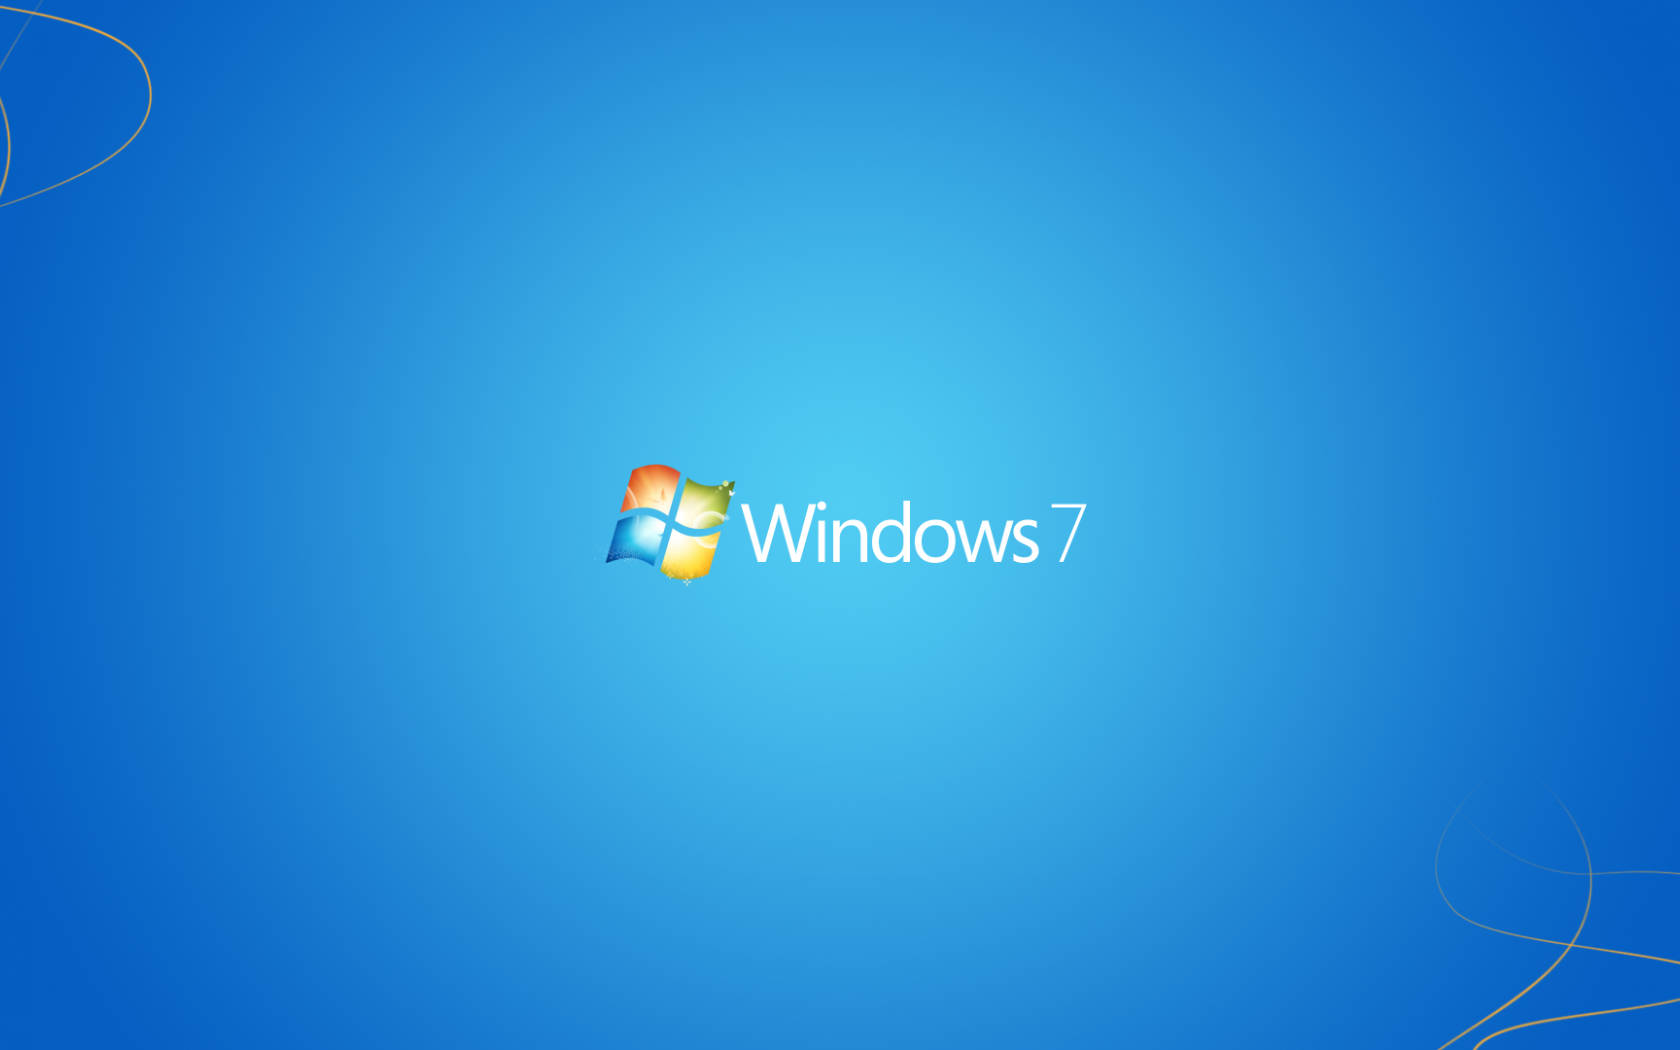 Simple Blue Original Windows 7 Wallpaper